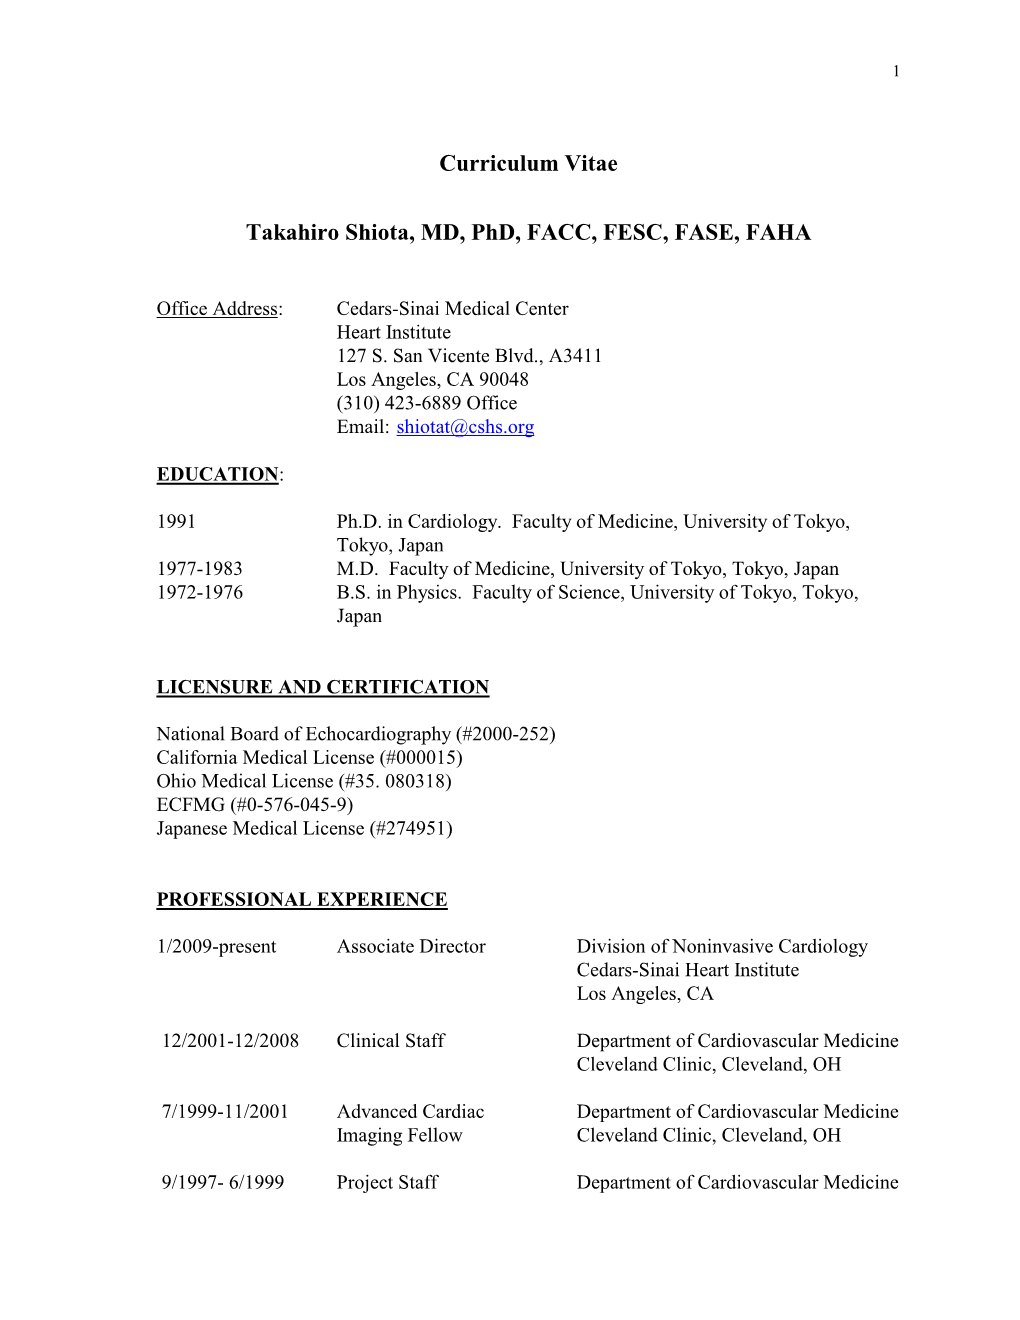 Curriculum Vitae Takahiro Shiota, MD, Phd, FACC, FESC, FASE, FAHA